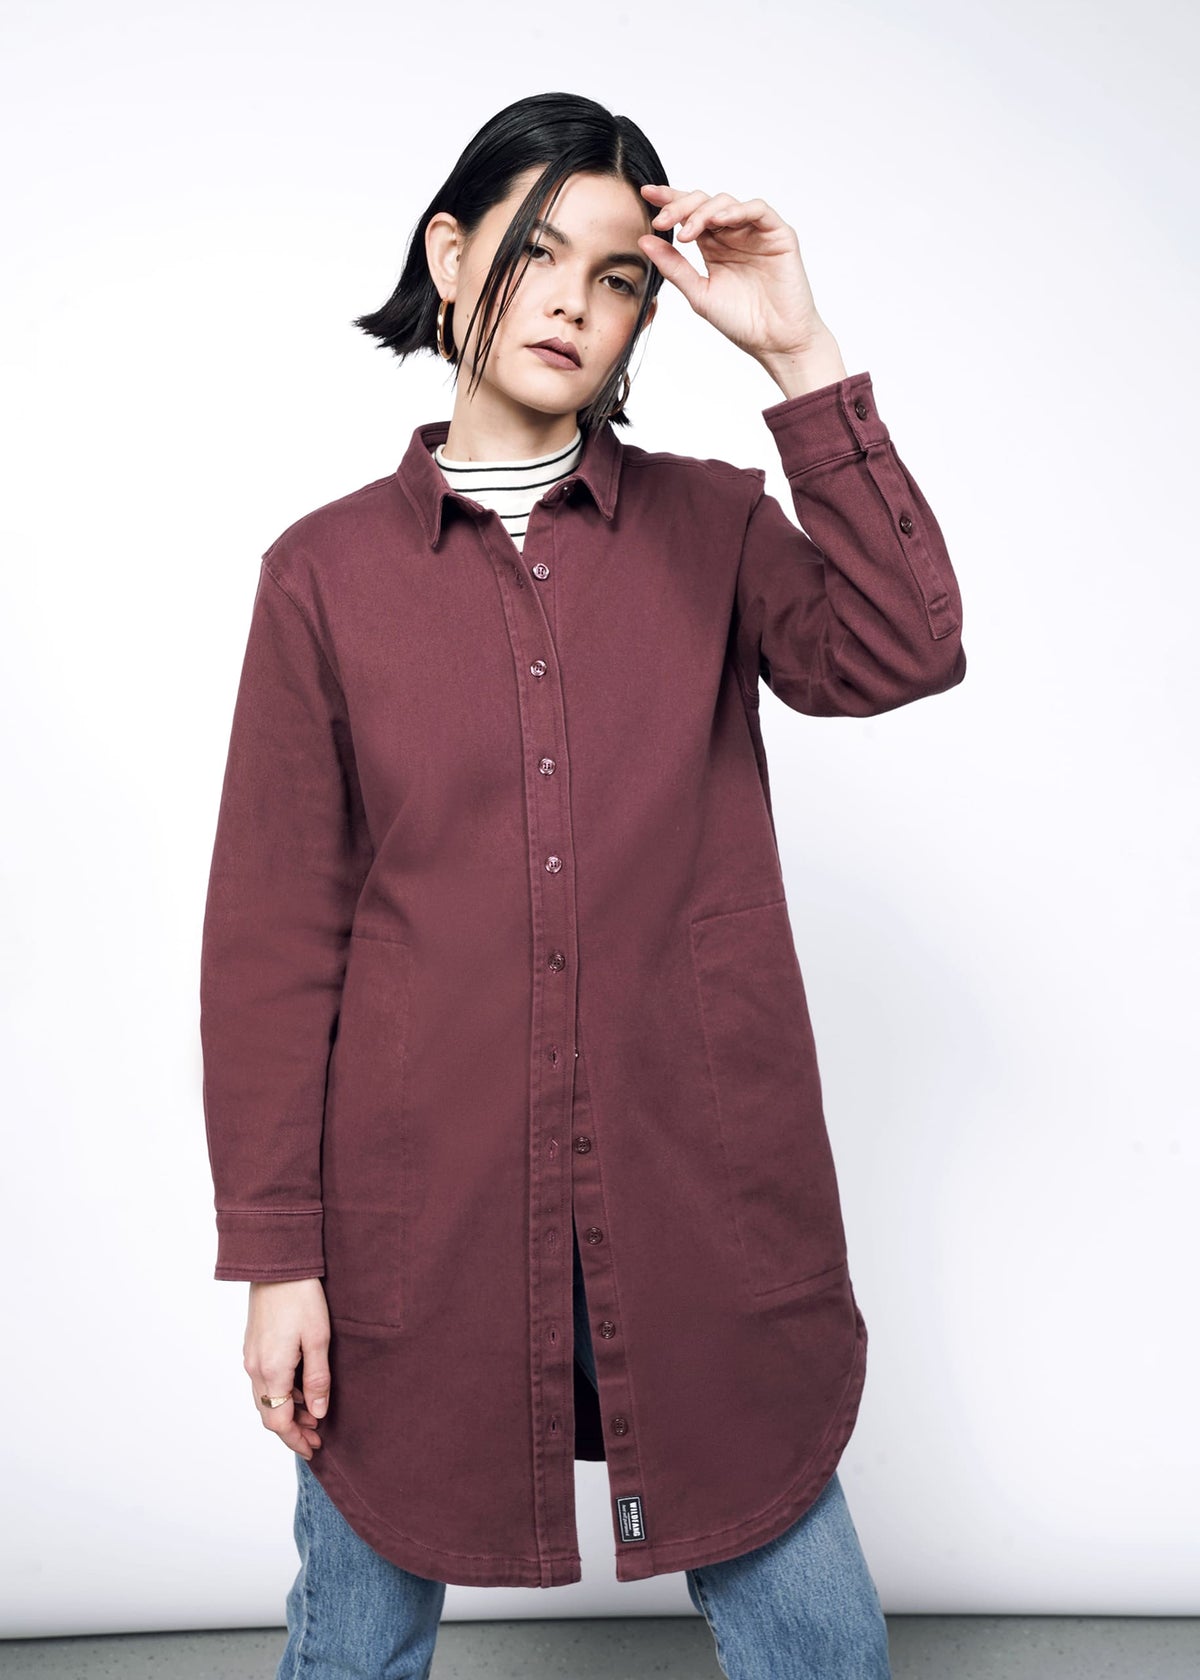 The Essential Denim Long Sleeve Shirt Dress in Merlot